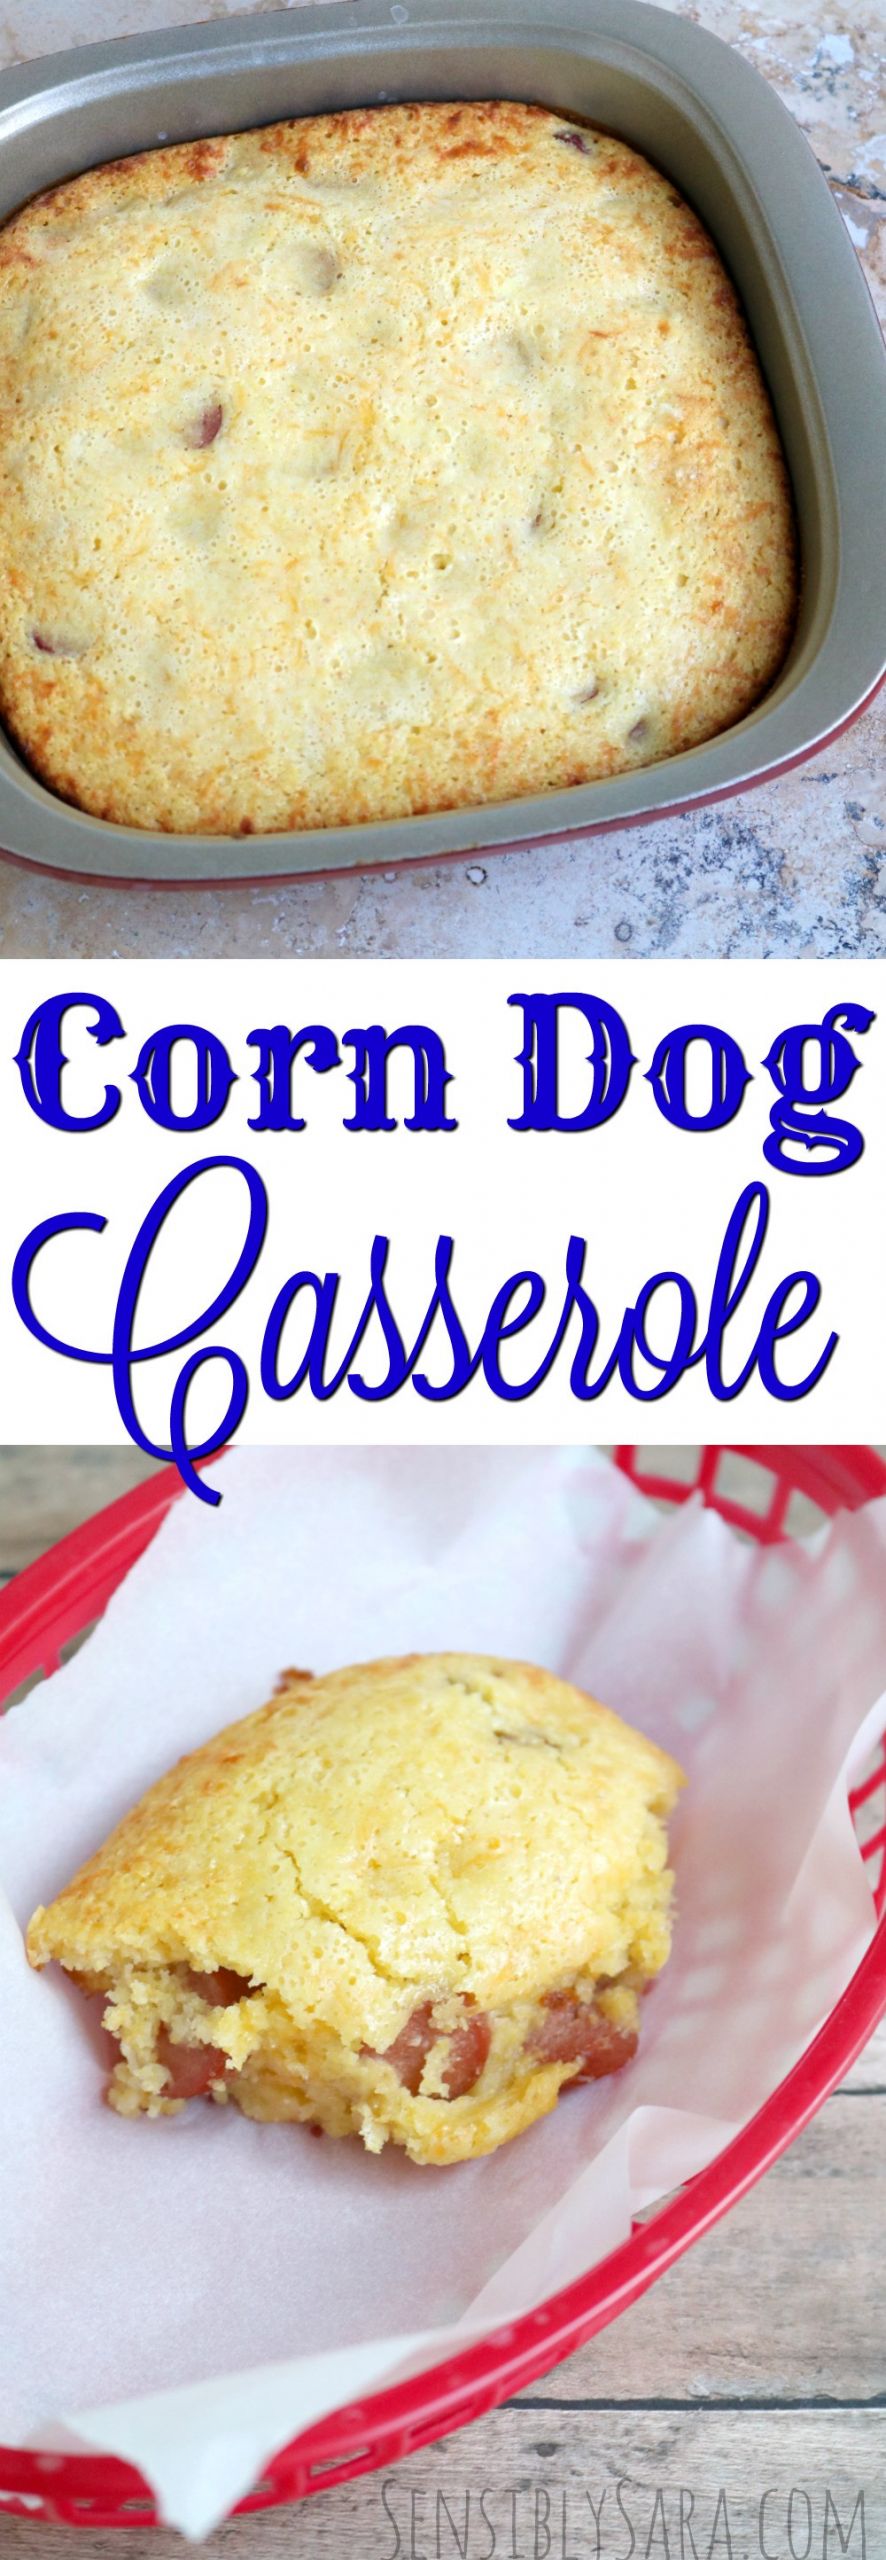 Corn Dog Casserole
 Try this Tasty Kid Friendly Corn Dog Casserole Recipe